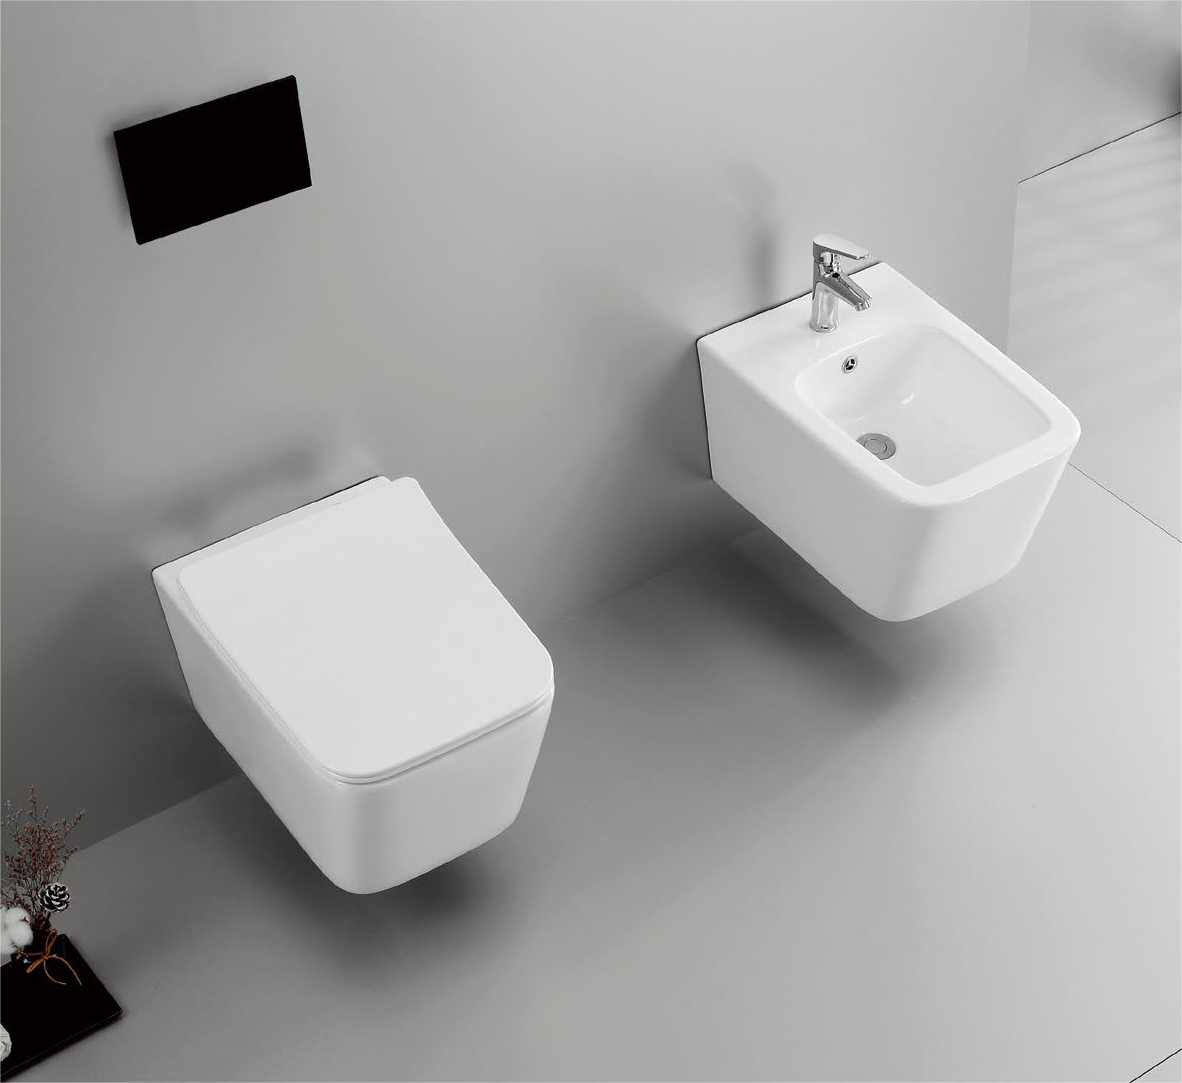 Ailin set Patented product wall hang toilet, bidet rimless, p-trap